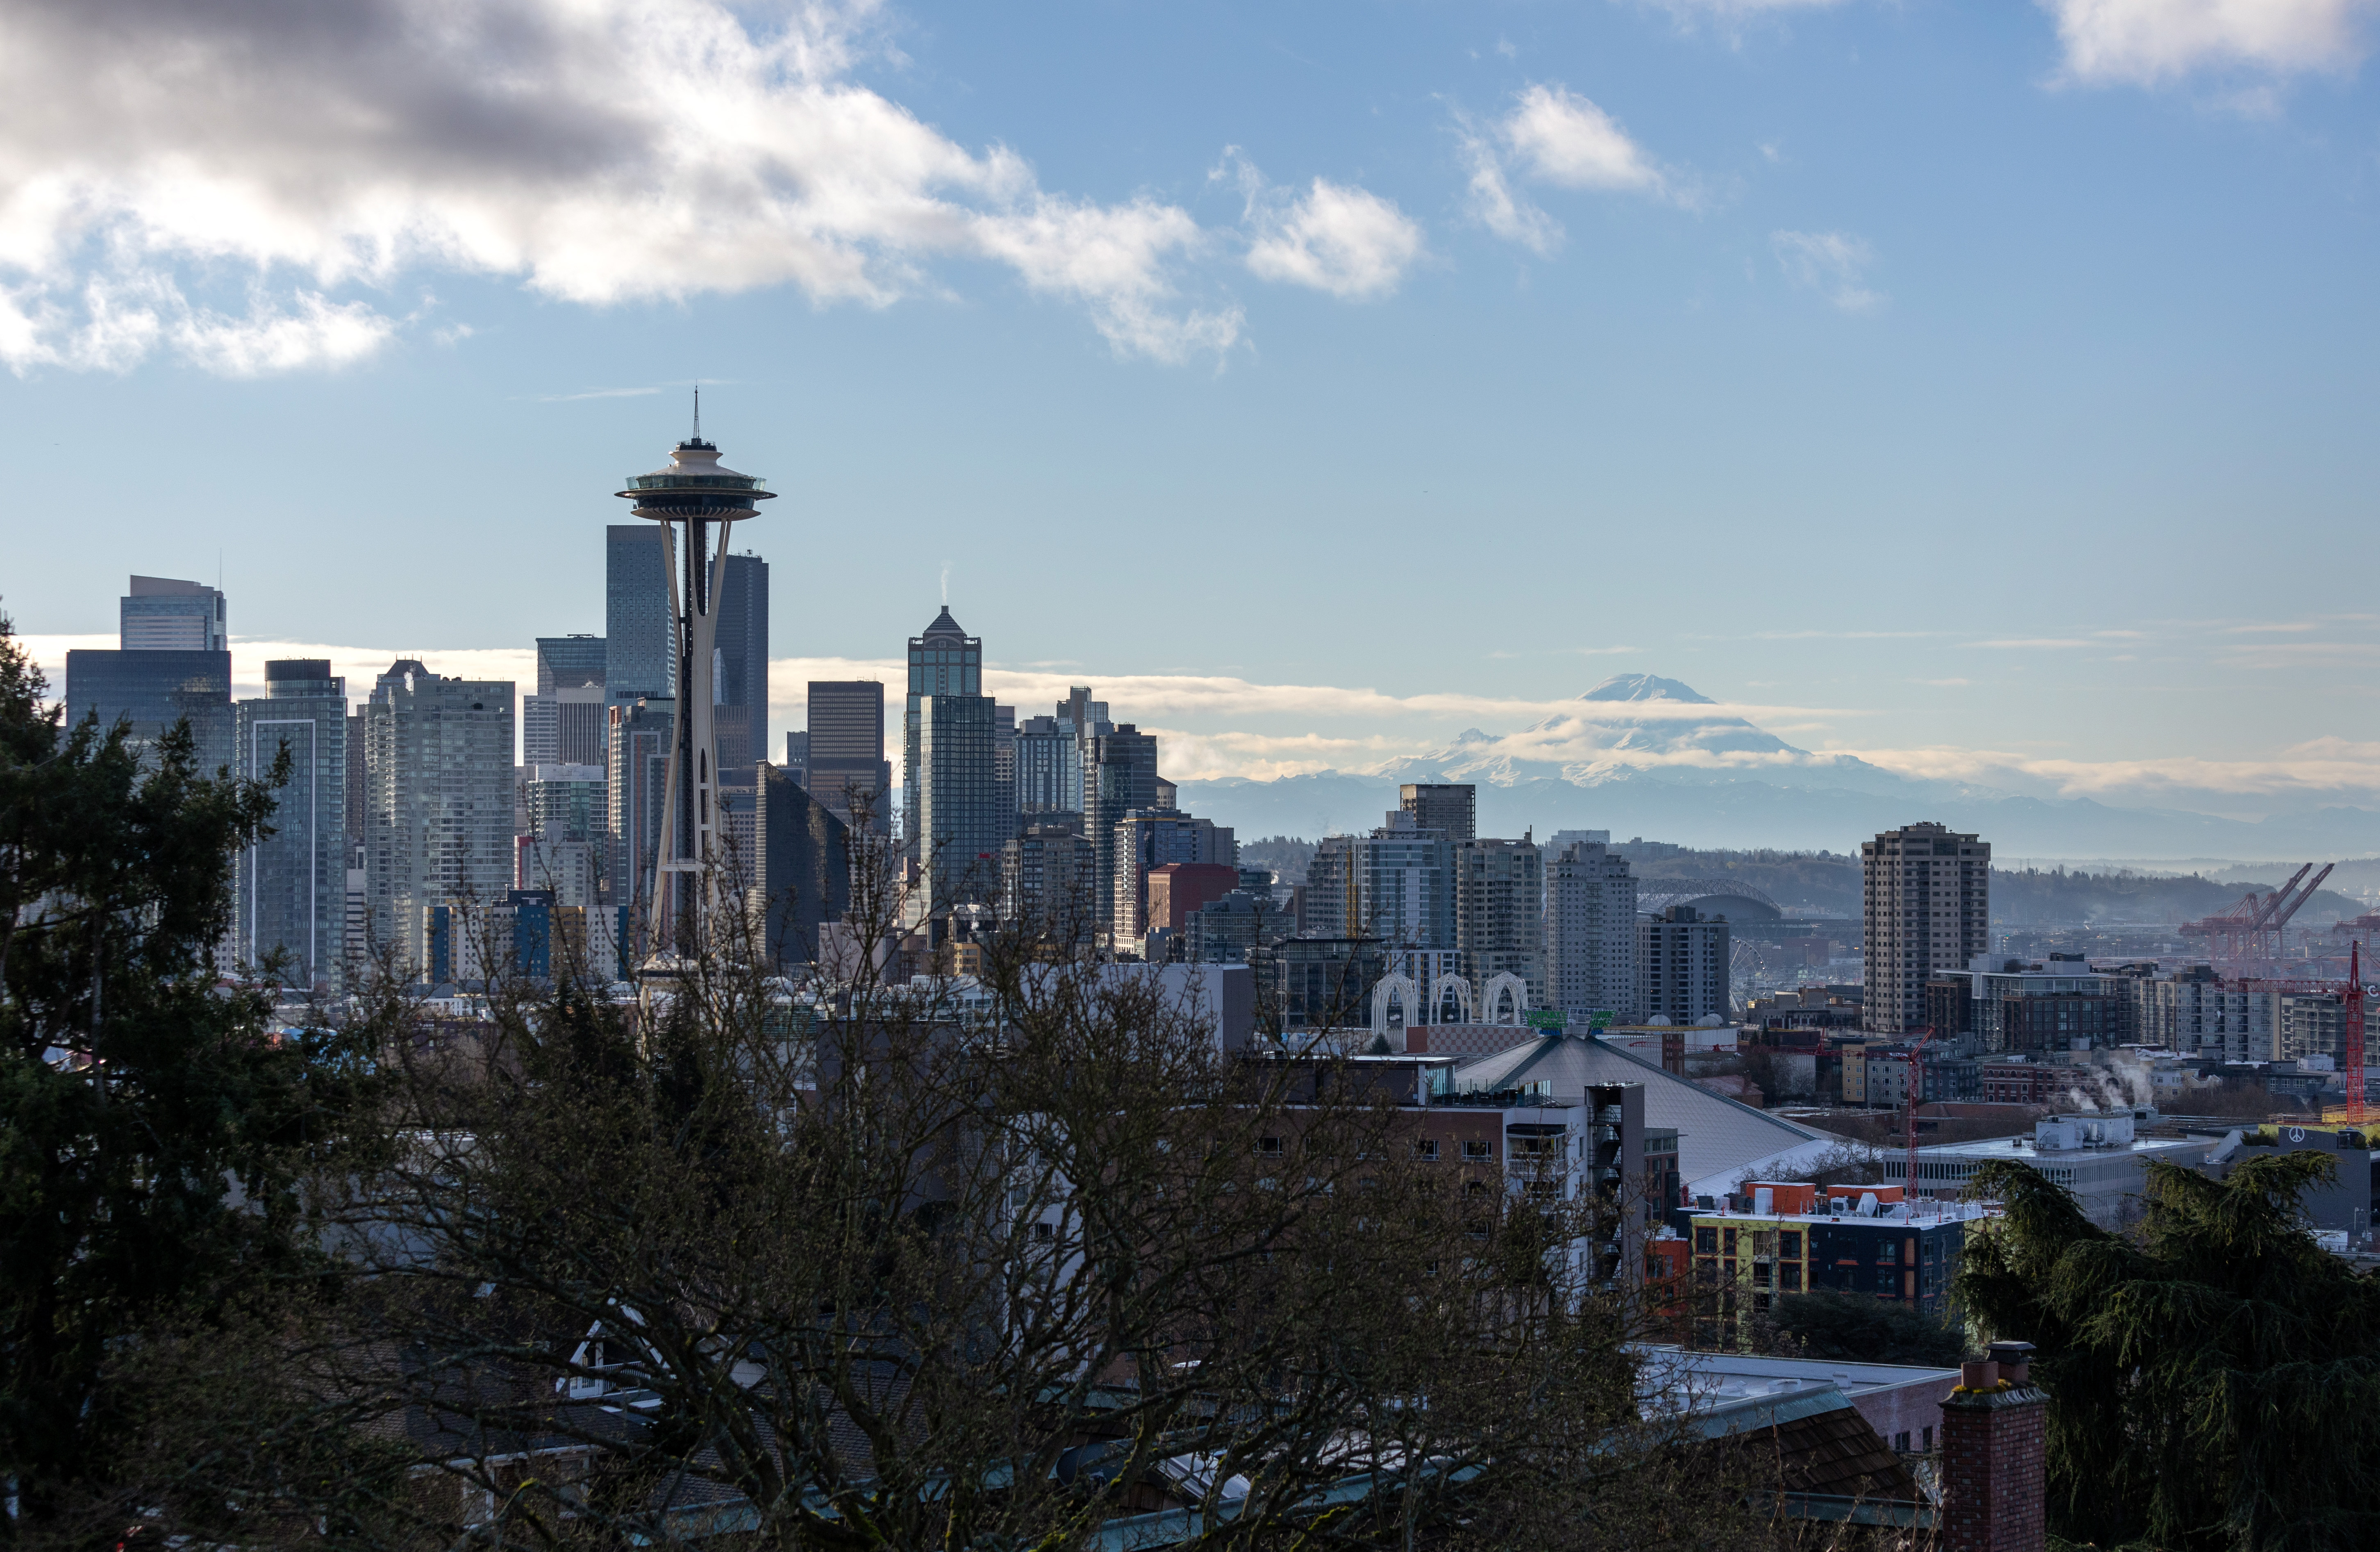 Seattle Mayor 'Very Optimistic' About NBA Returning amid Expansion Rumors